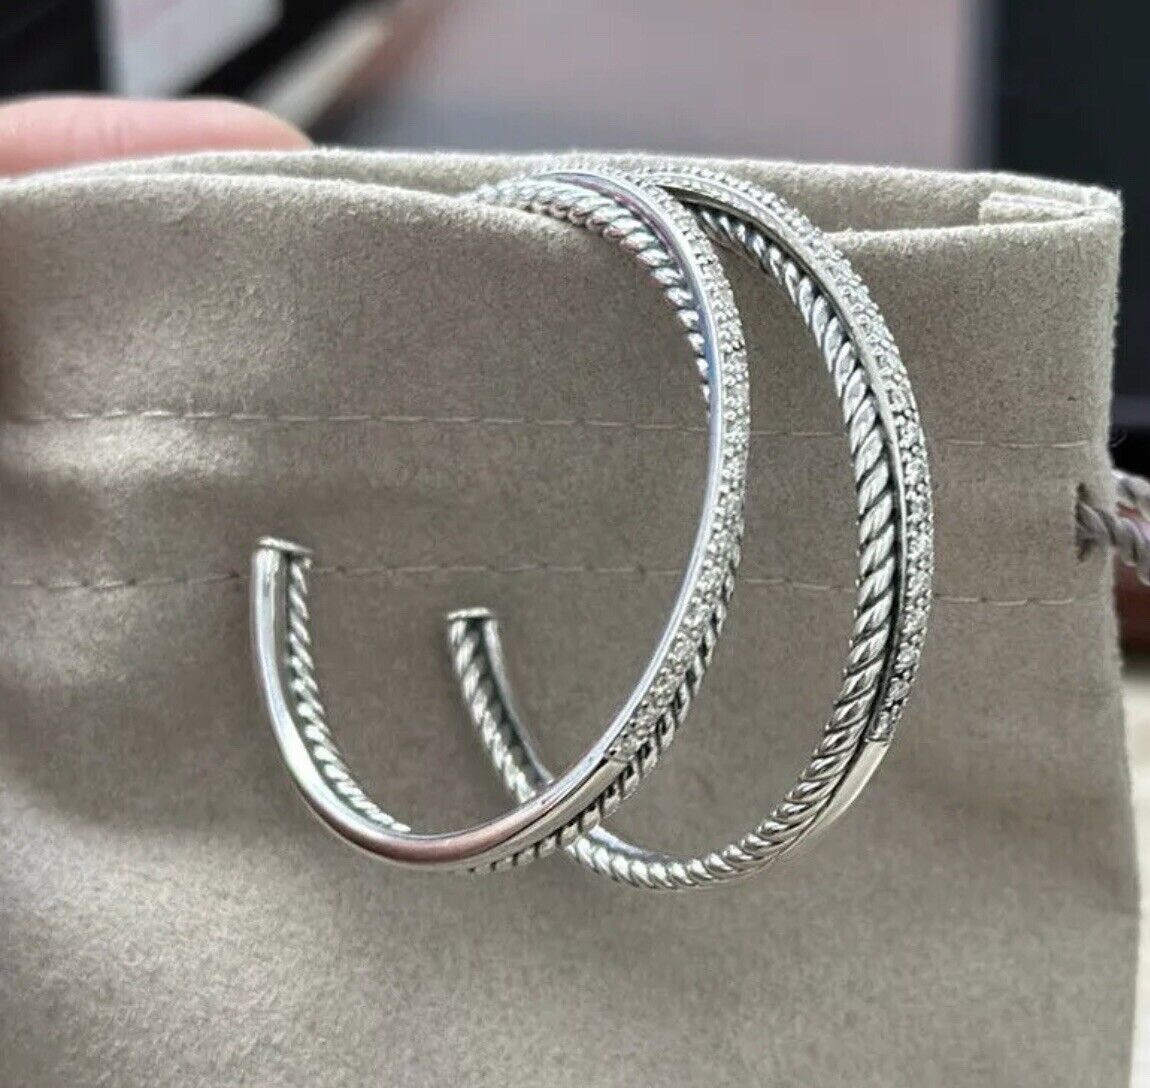 David Yurman Sterling Silver Crossover Extra-Large Hoop Earrings Diamonds 44mm